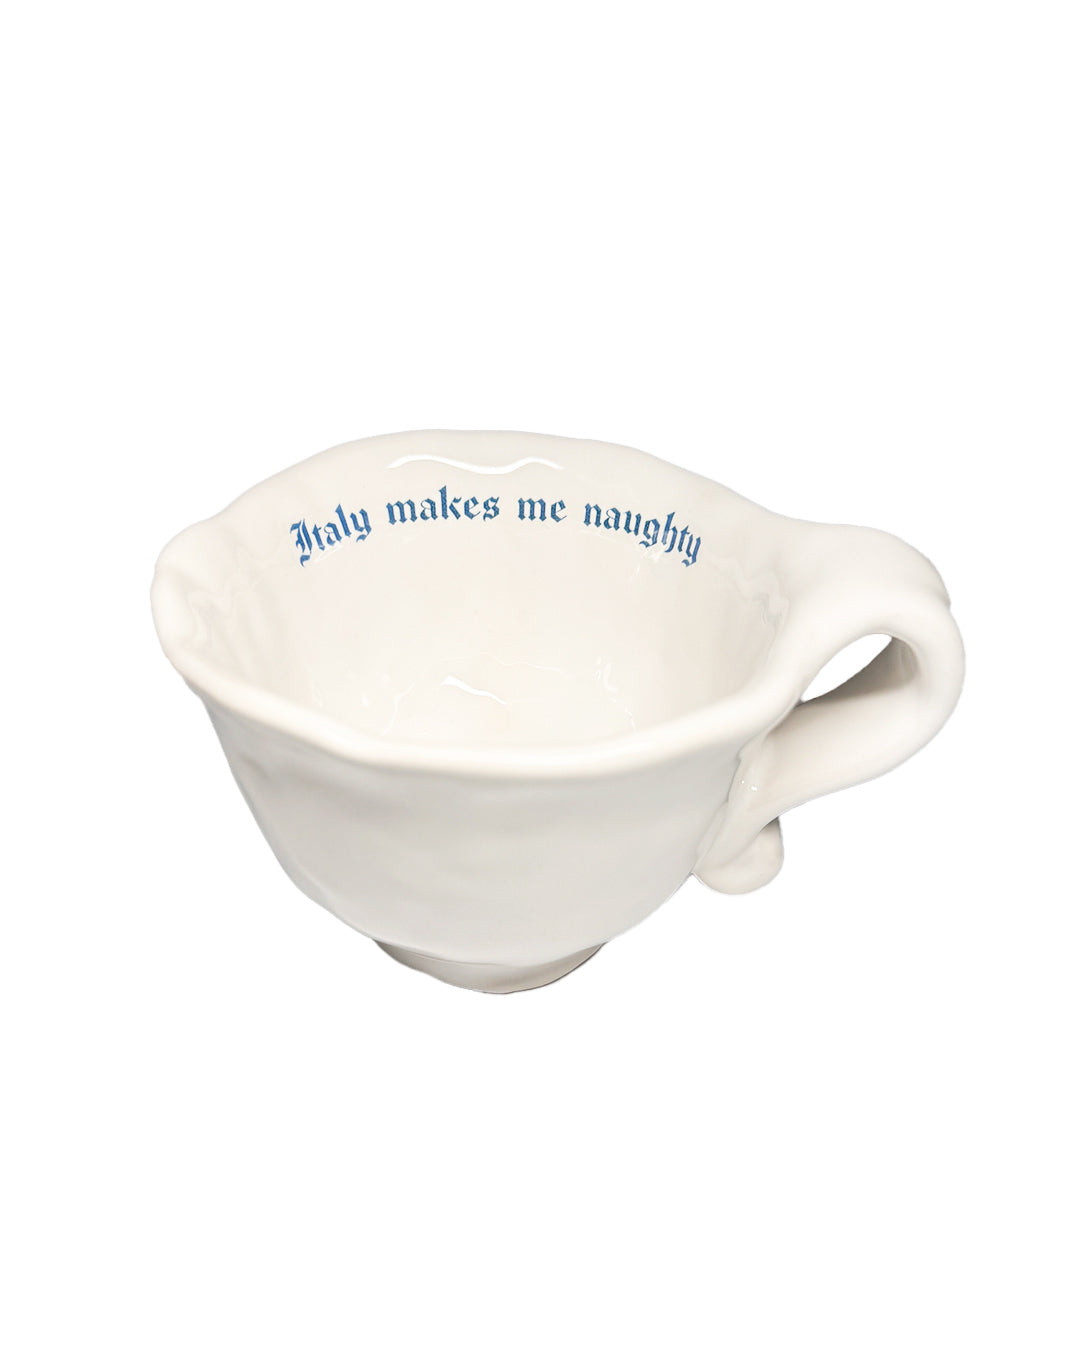 Handmade cappuccino cup with gothic text - Sassy - Incartato Ceramics